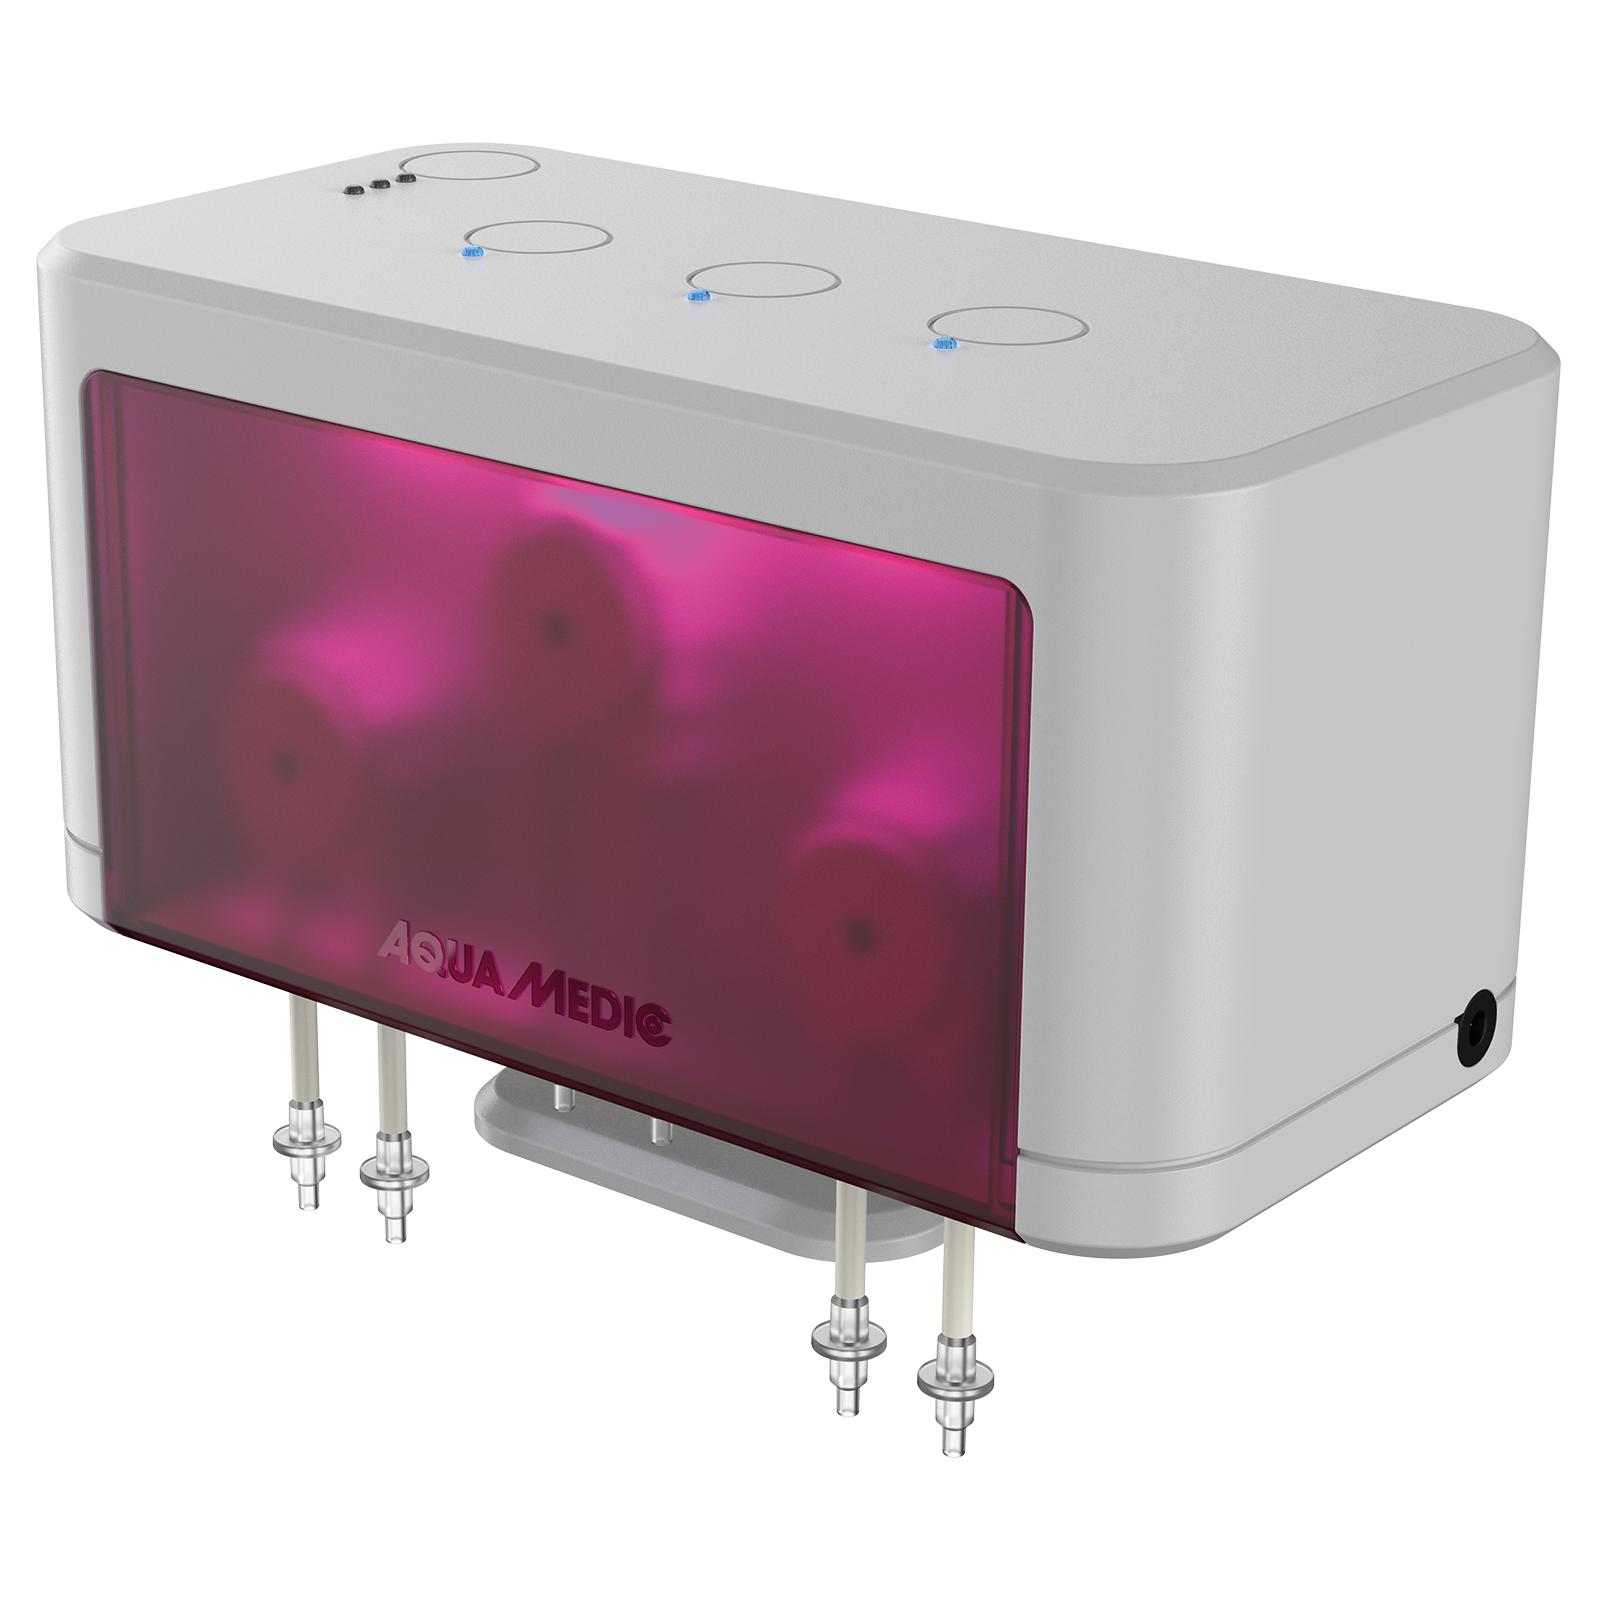 AQUA MEDIC reefdoser EVO 3 pompe doseuse 3 canaux péristaltiques contrôlable par Smartphone